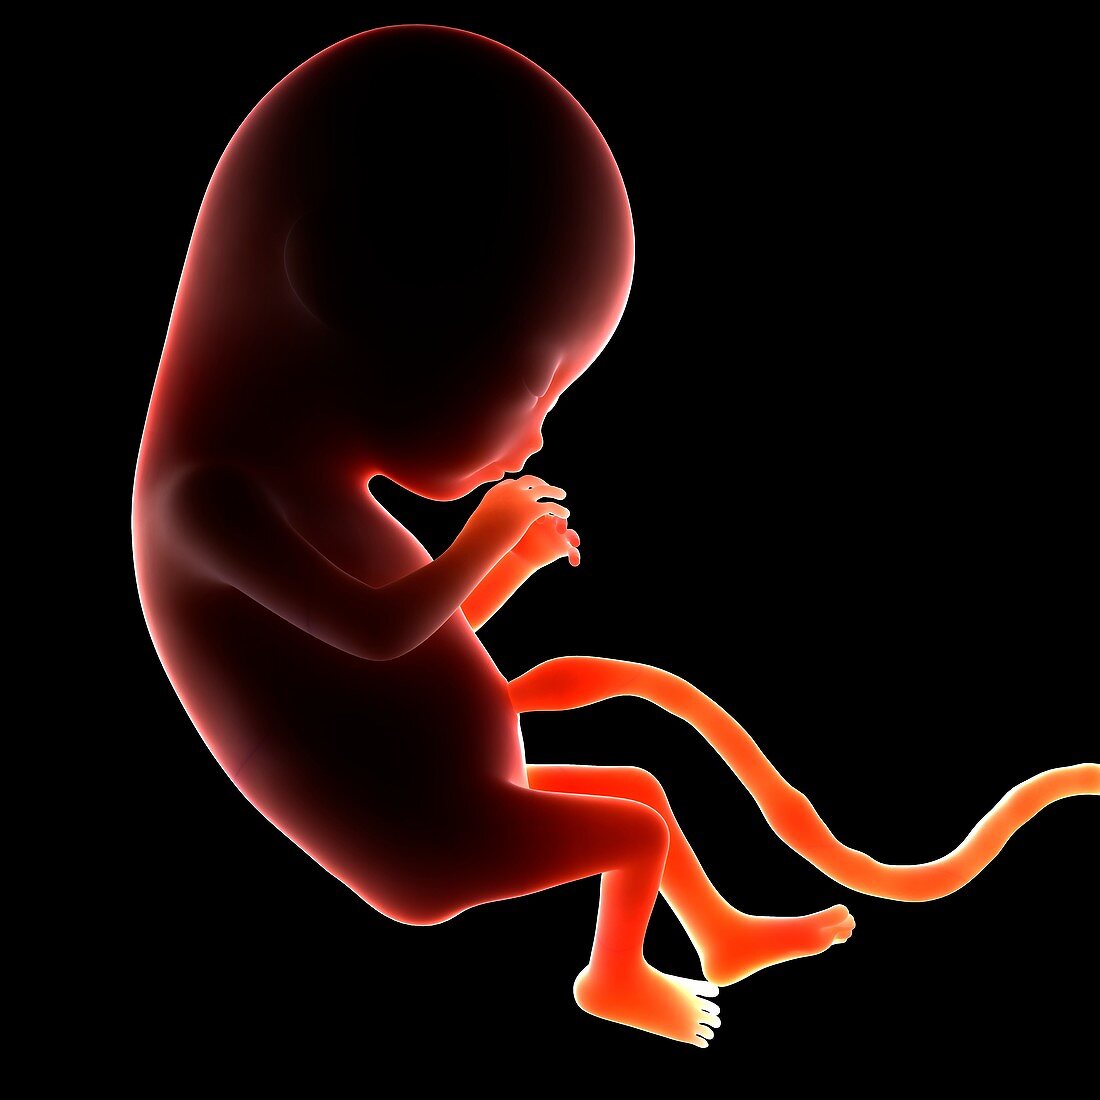 Two month old foetus,artwork